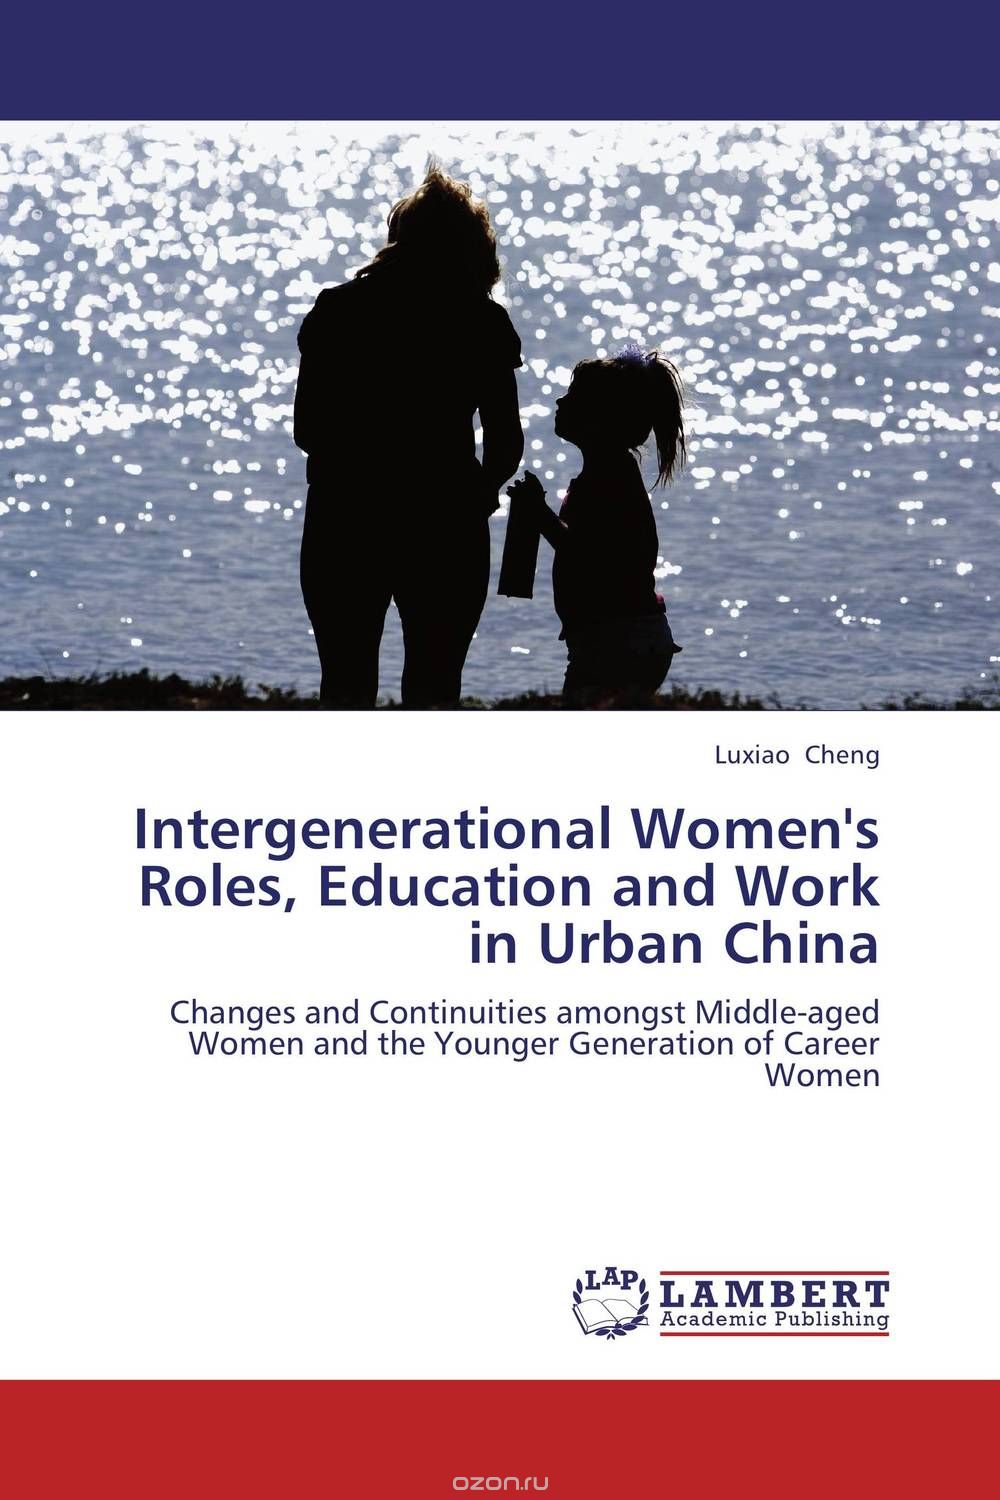 Скачать книгу "Intergenerational Women's Roles, Education and Work in Urban China"